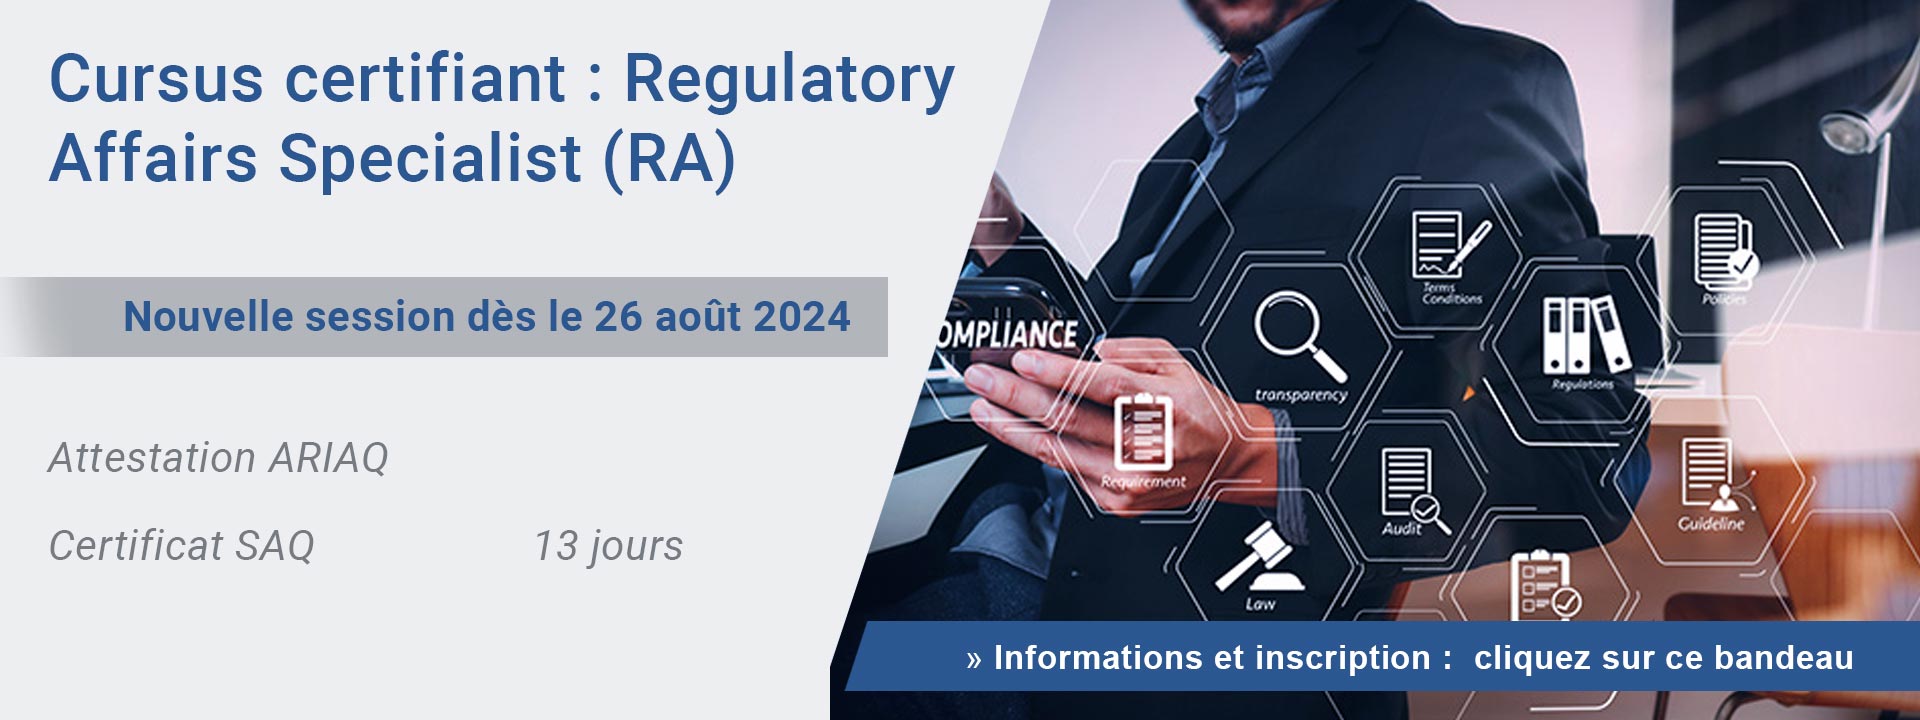 Cursus certifiant : Regulatory Affairs Specialist (RA)